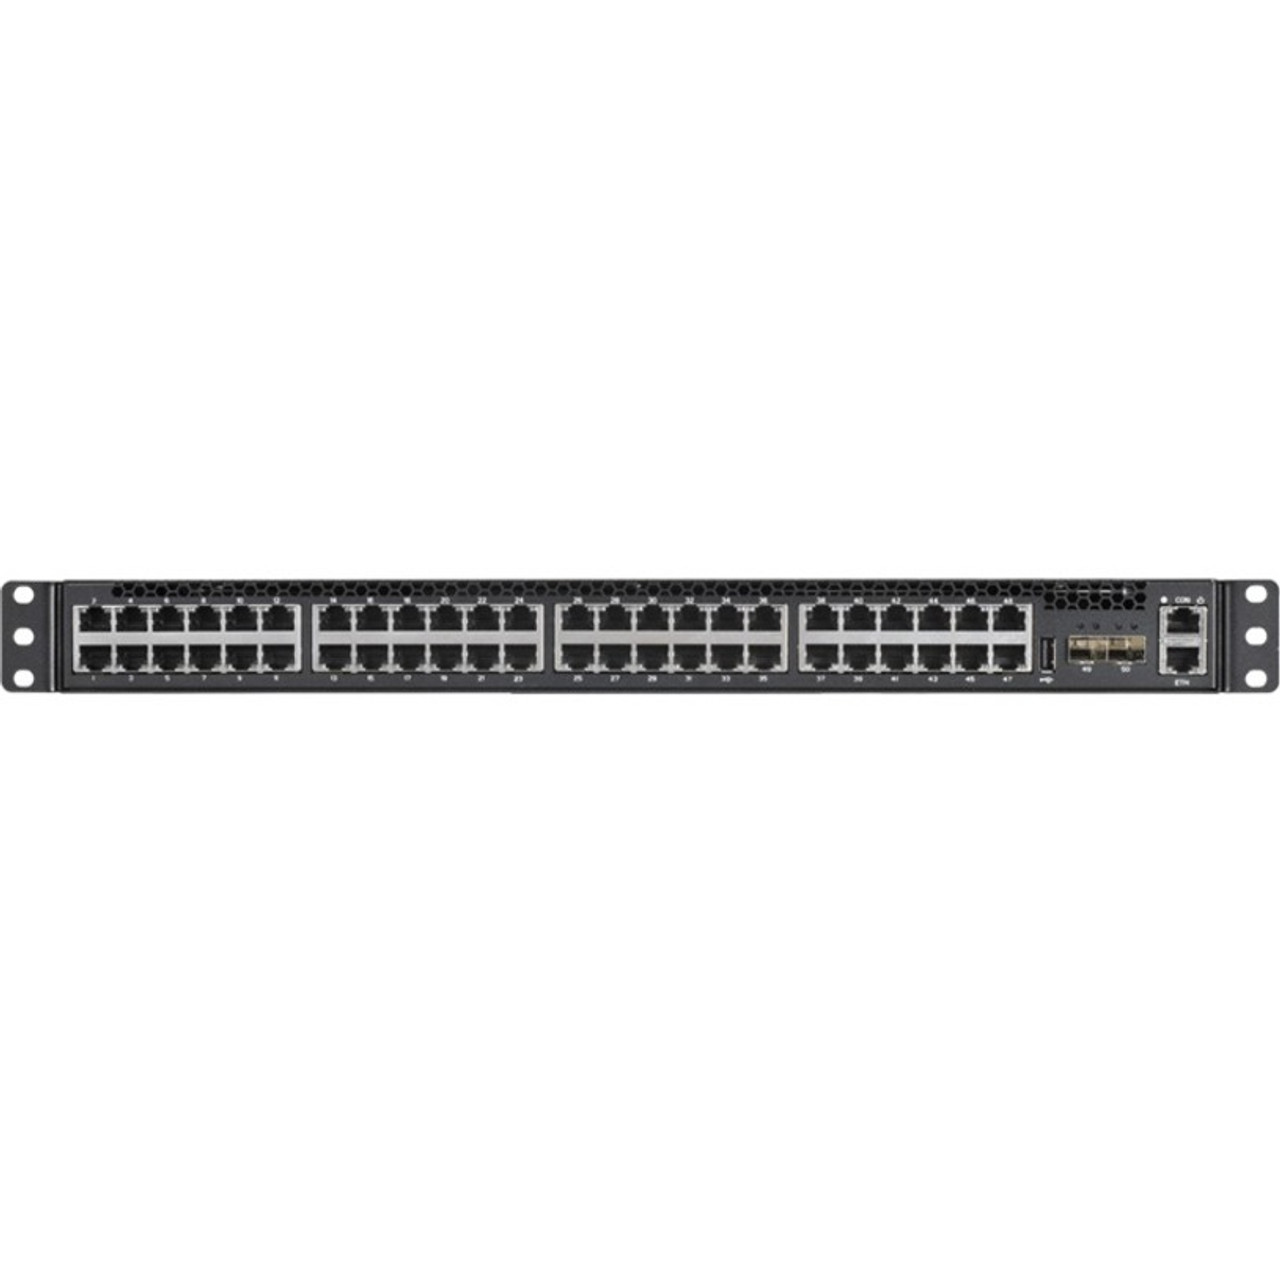 QCT 1G/10G Enterprise-Class Ethernet switch 1LY4AZZ000H